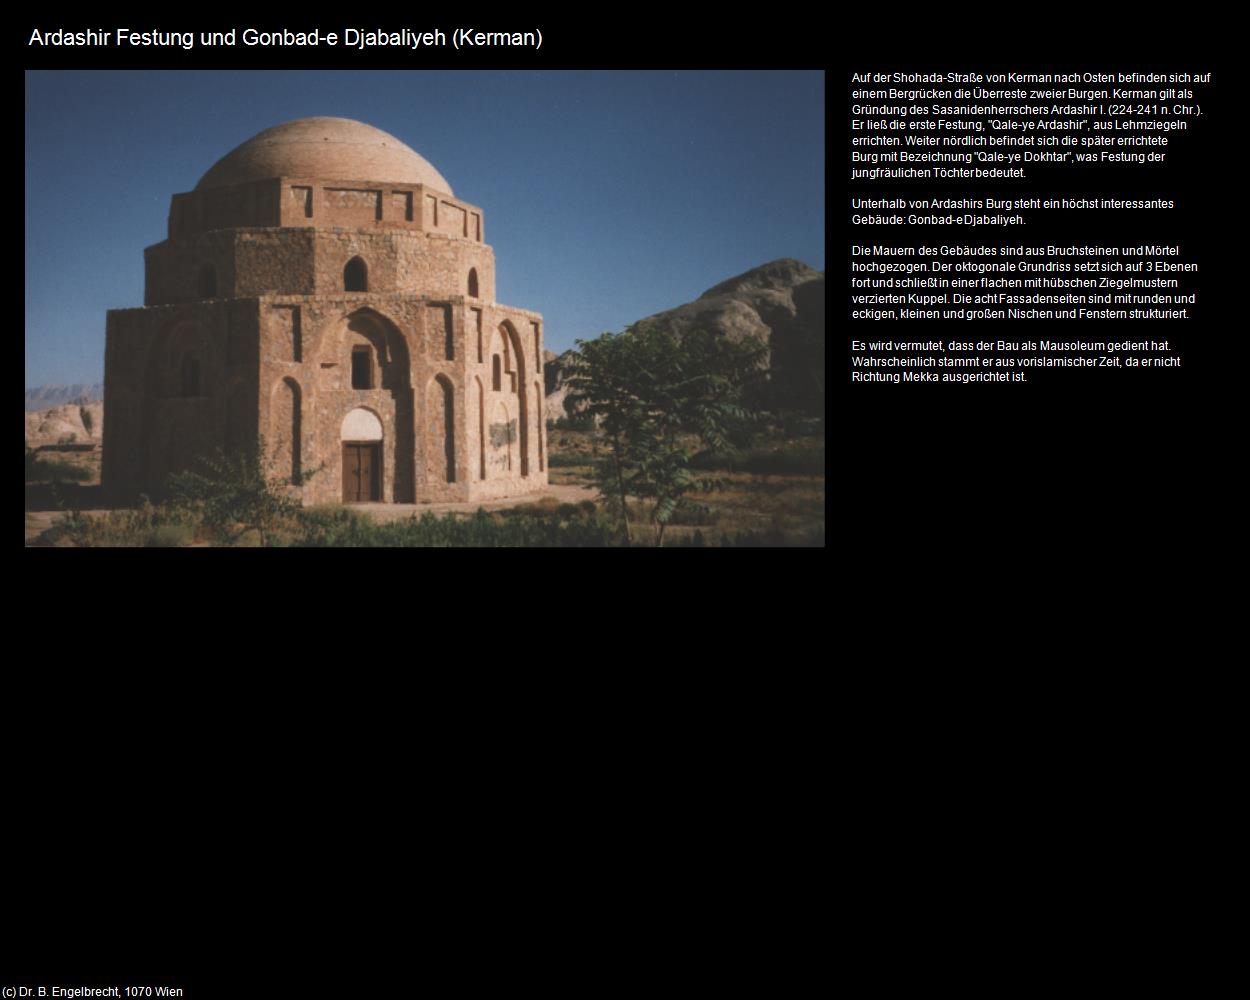 Ardashir Festung und Gonbad-e Djabaliyeh (Kerman) in Iran